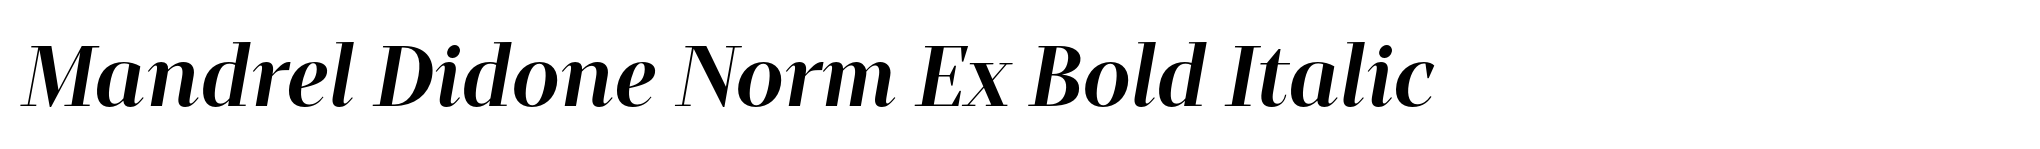 Mandrel Didone Norm Ex Bold Italic image